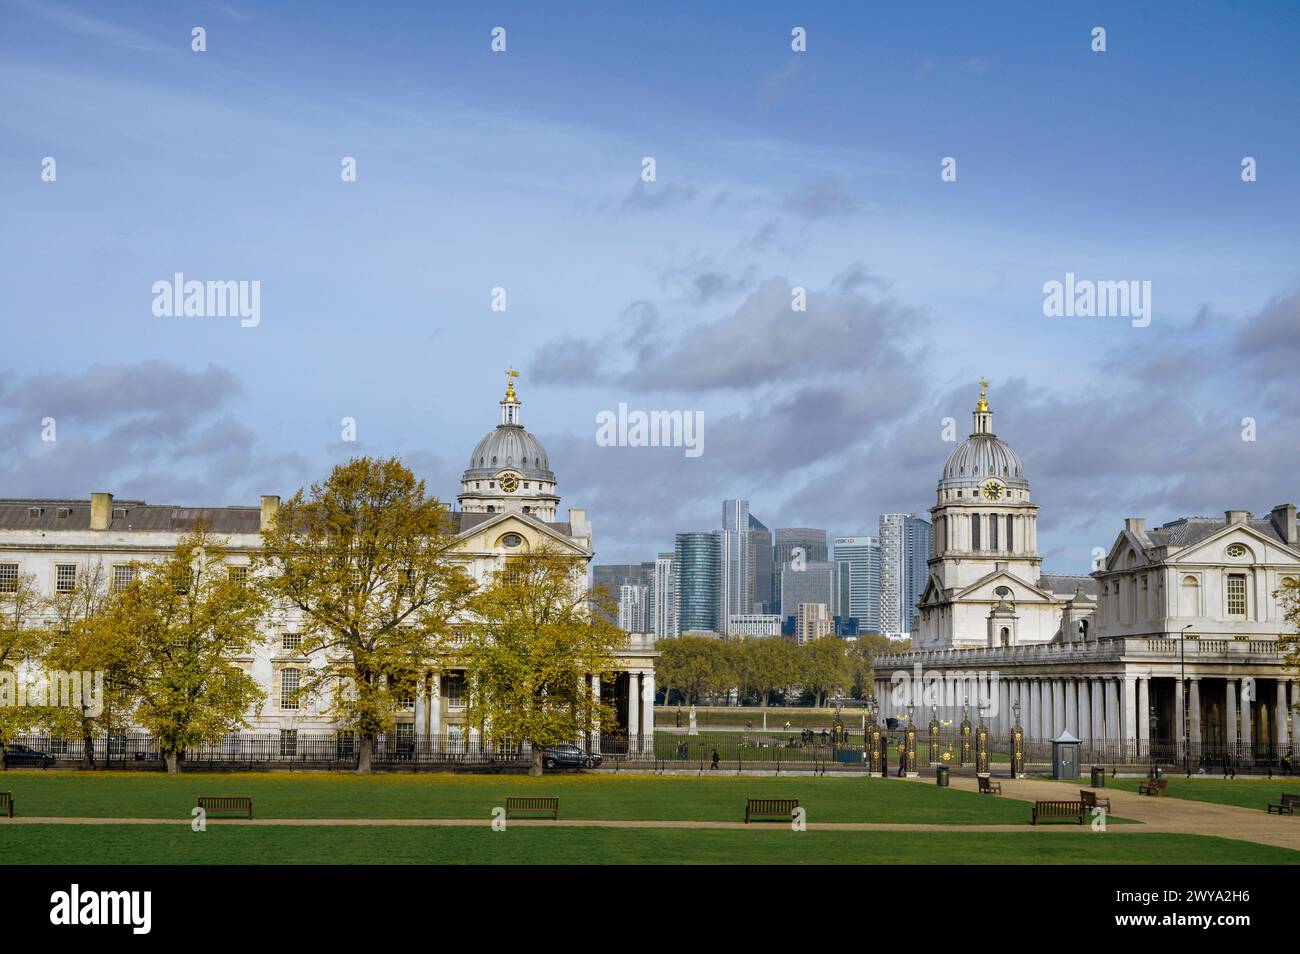 Old Royal Naval College, Greenwich, London, England, mit Skyline des Londoner Bankenviertels dahinter. Stockfoto